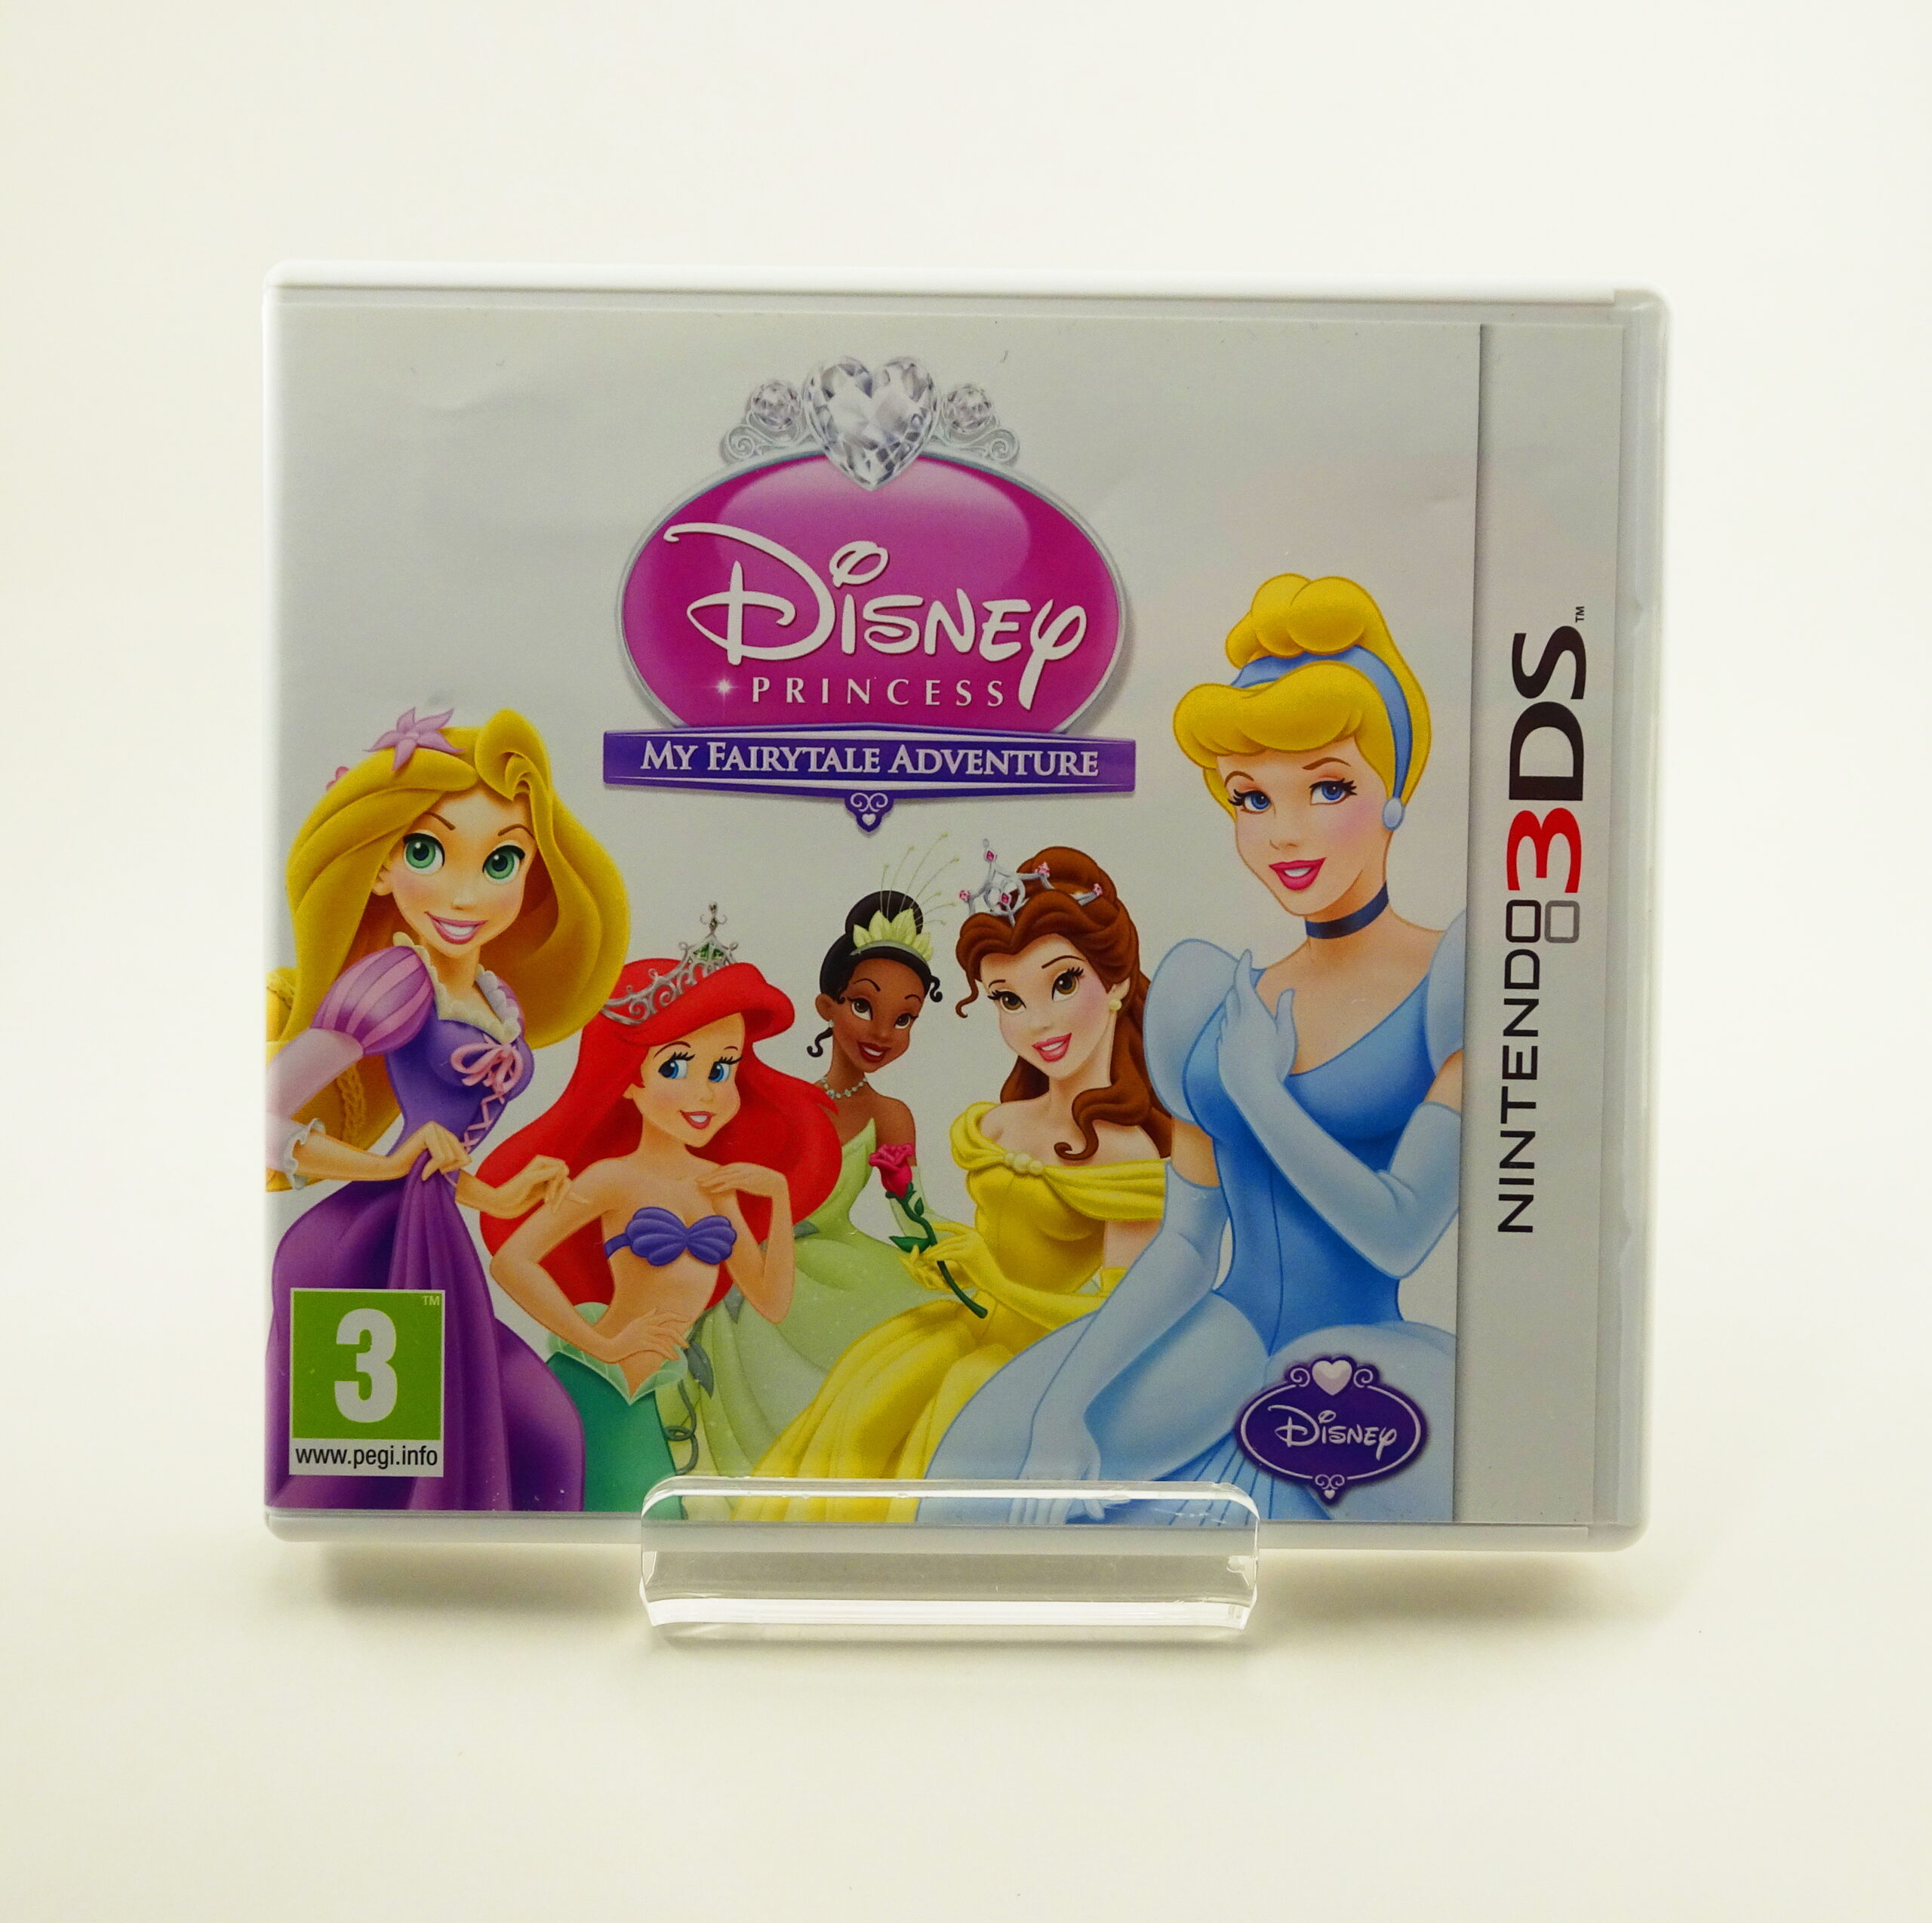 Disney Princess: My Fairytale Adventure (3DS)